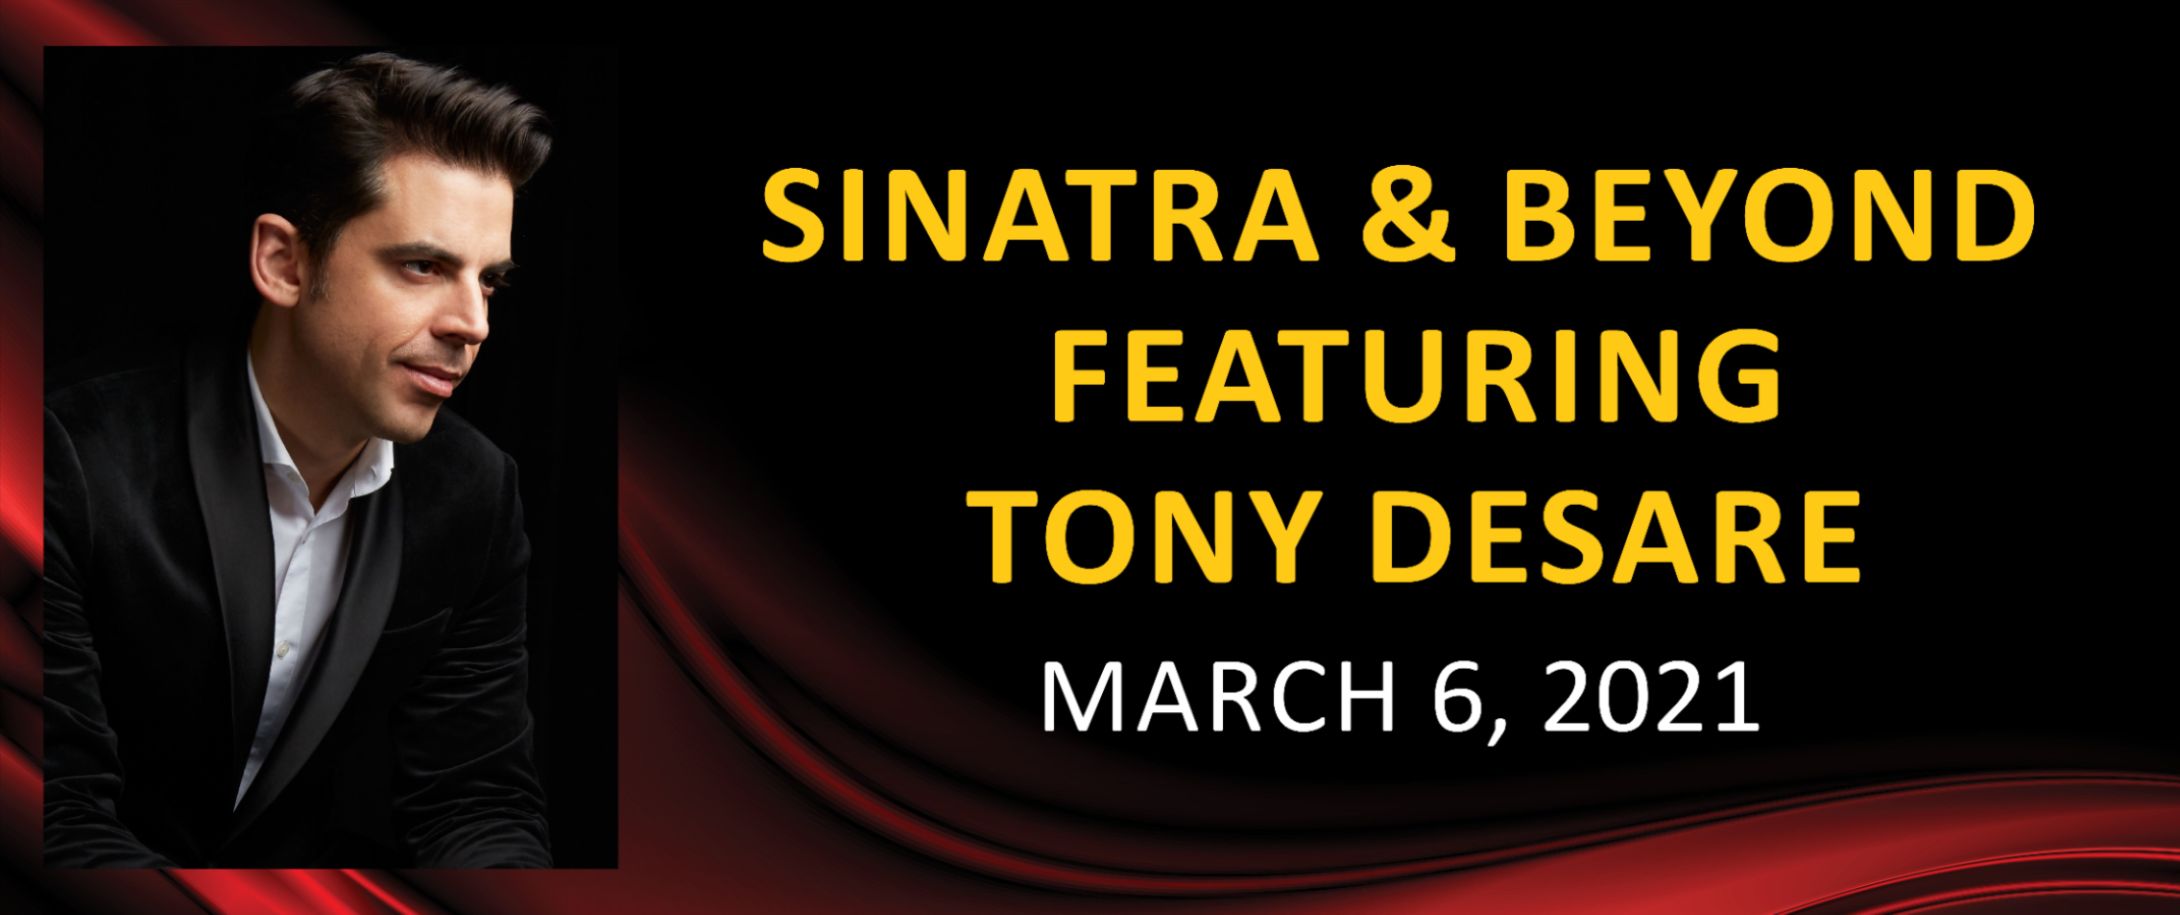 Sinatra & Beyond Featuring Tony DeSare